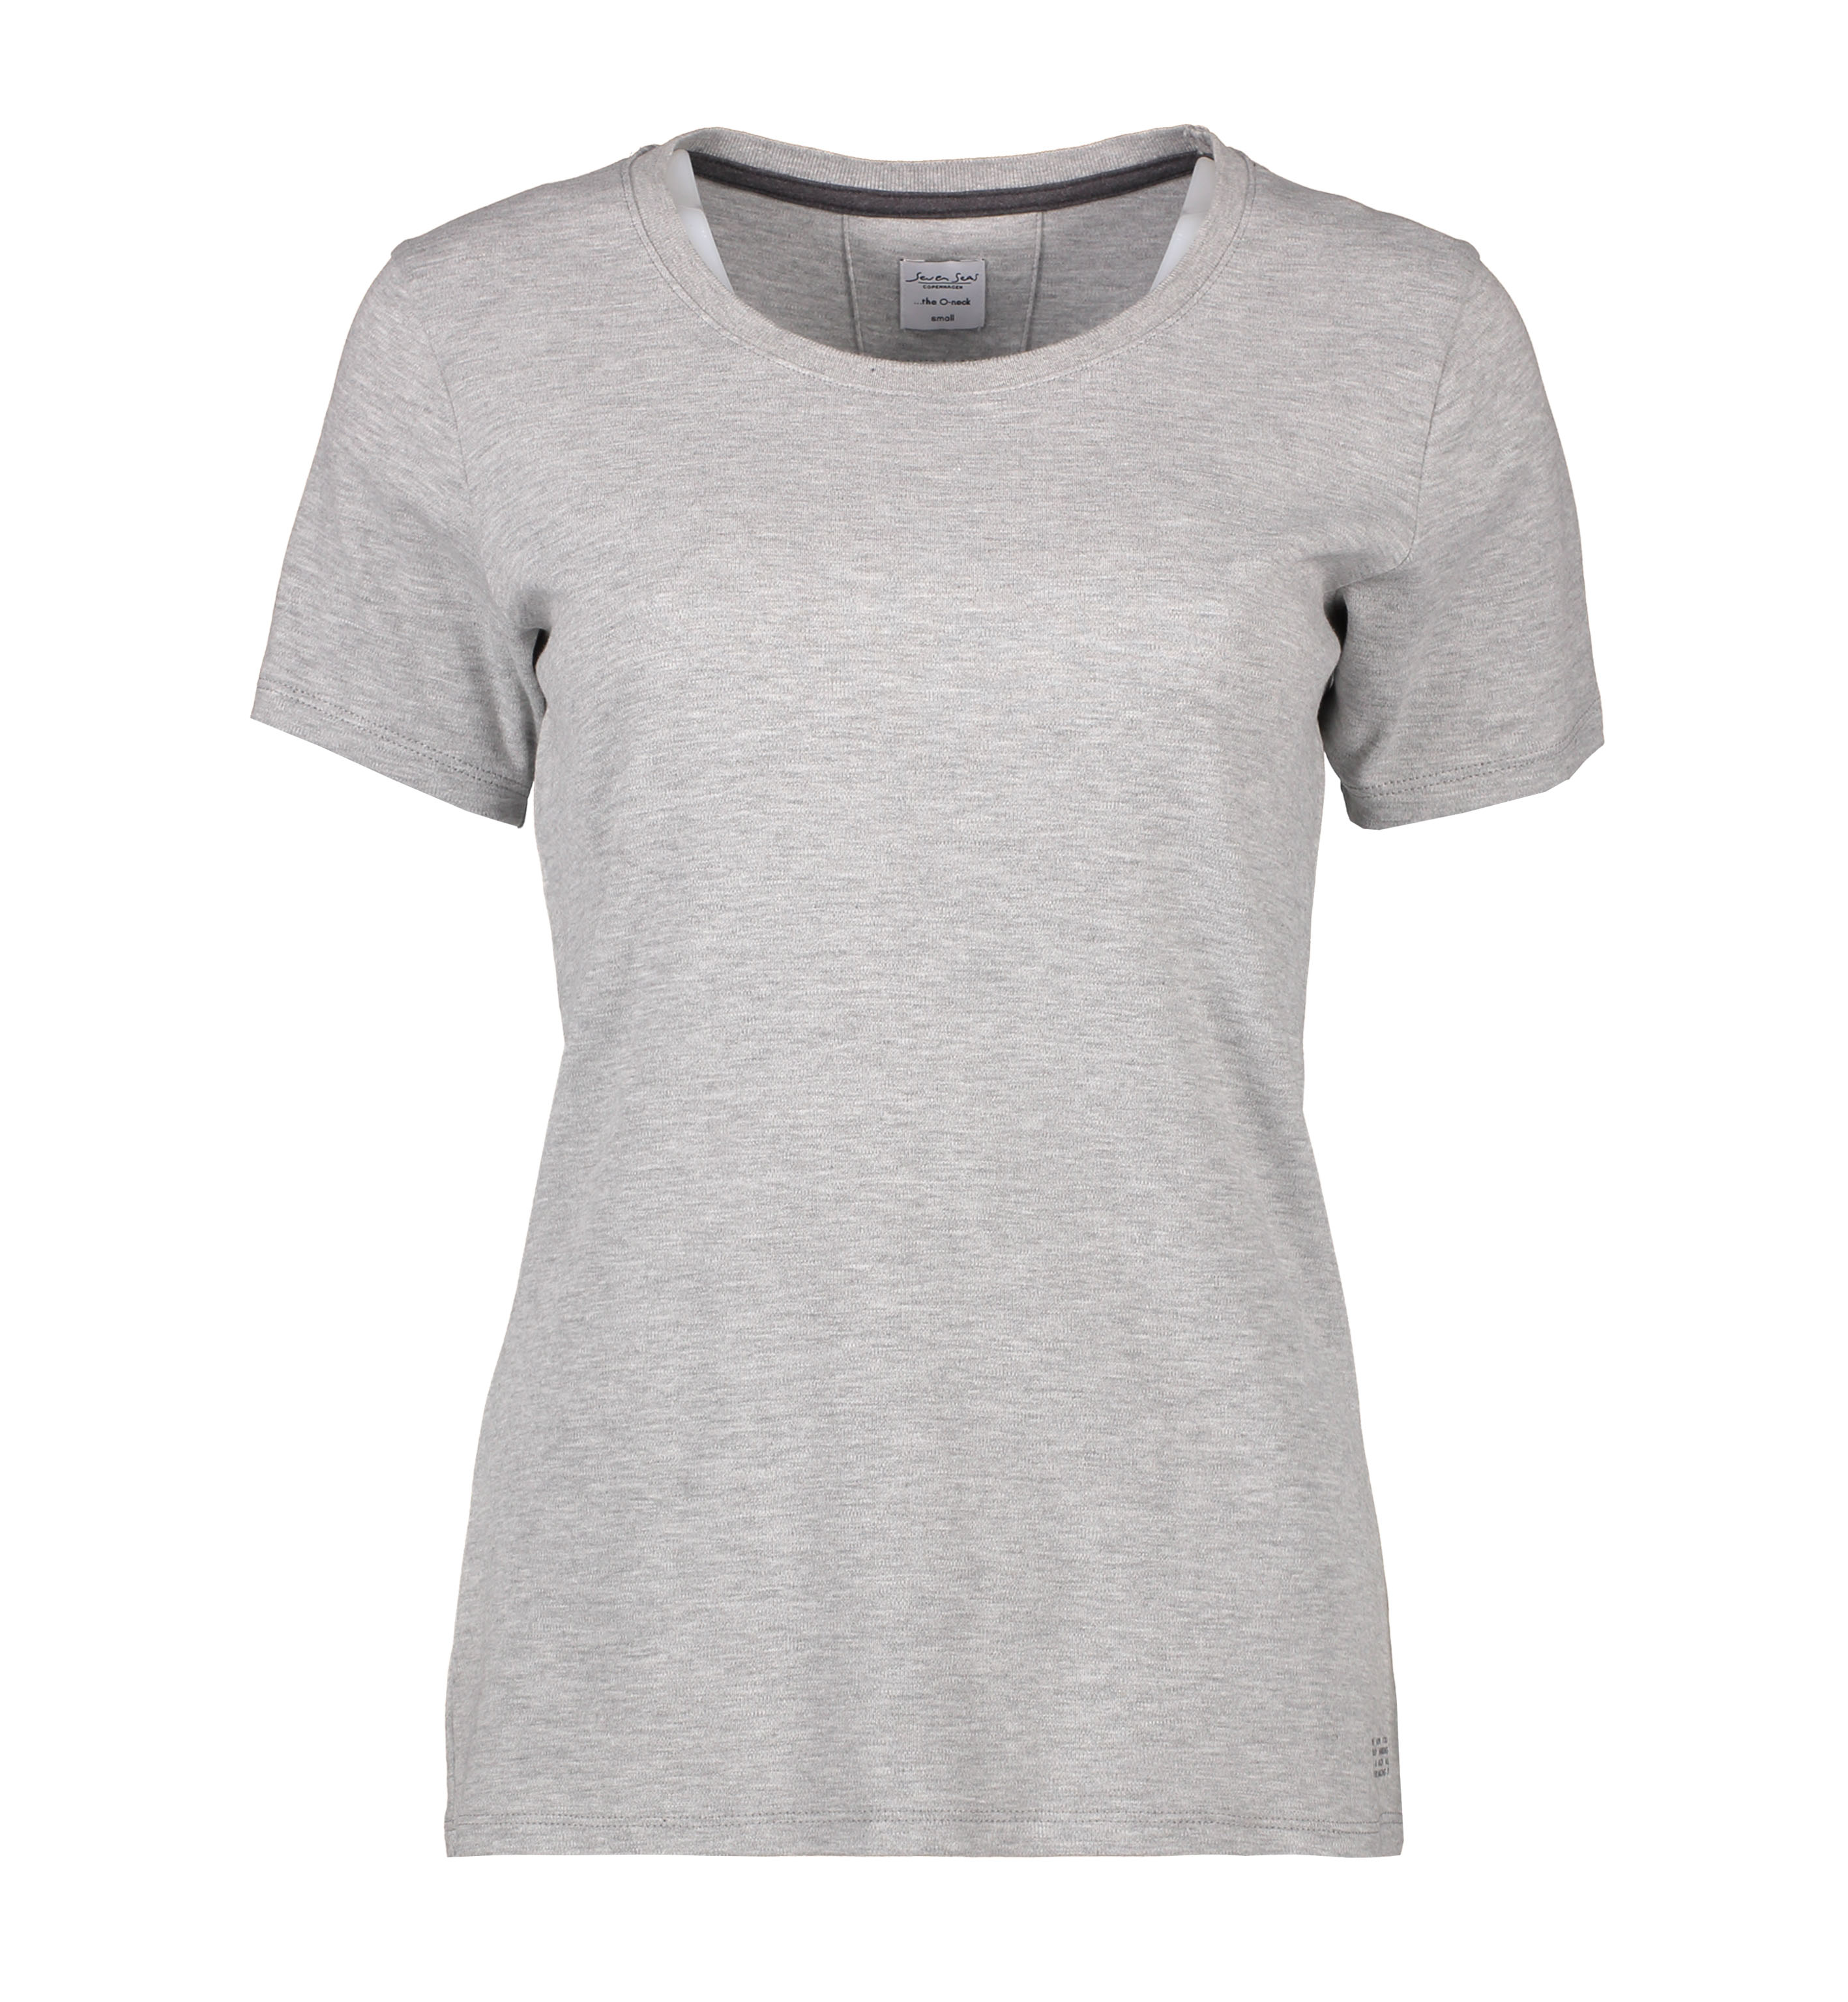 Ladies' T-shirt interlock 180 g/m² Seven Seas® light gray mottled S